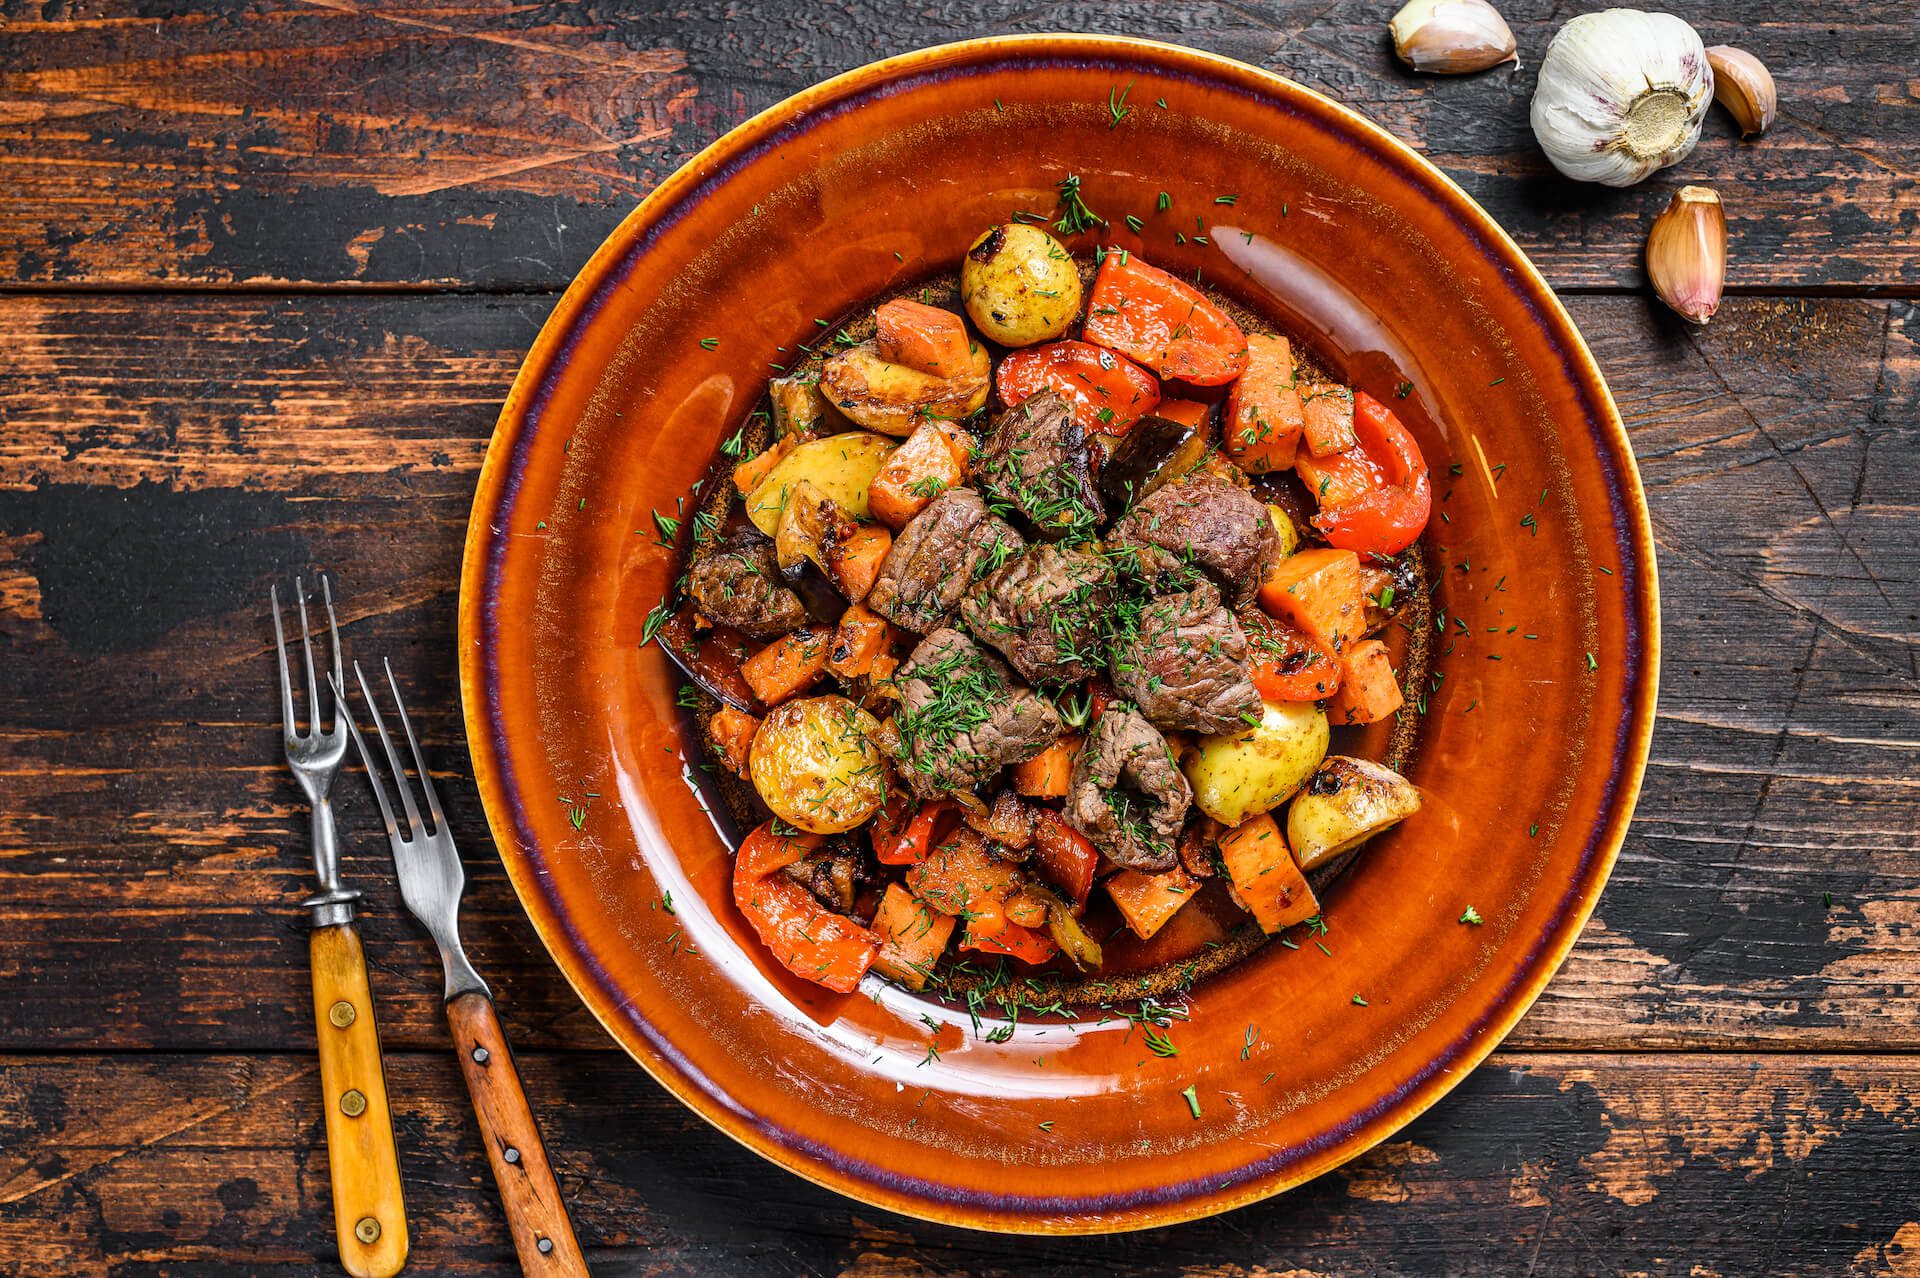 Bowl of Beef, Carrot, and Potato Irish Stew